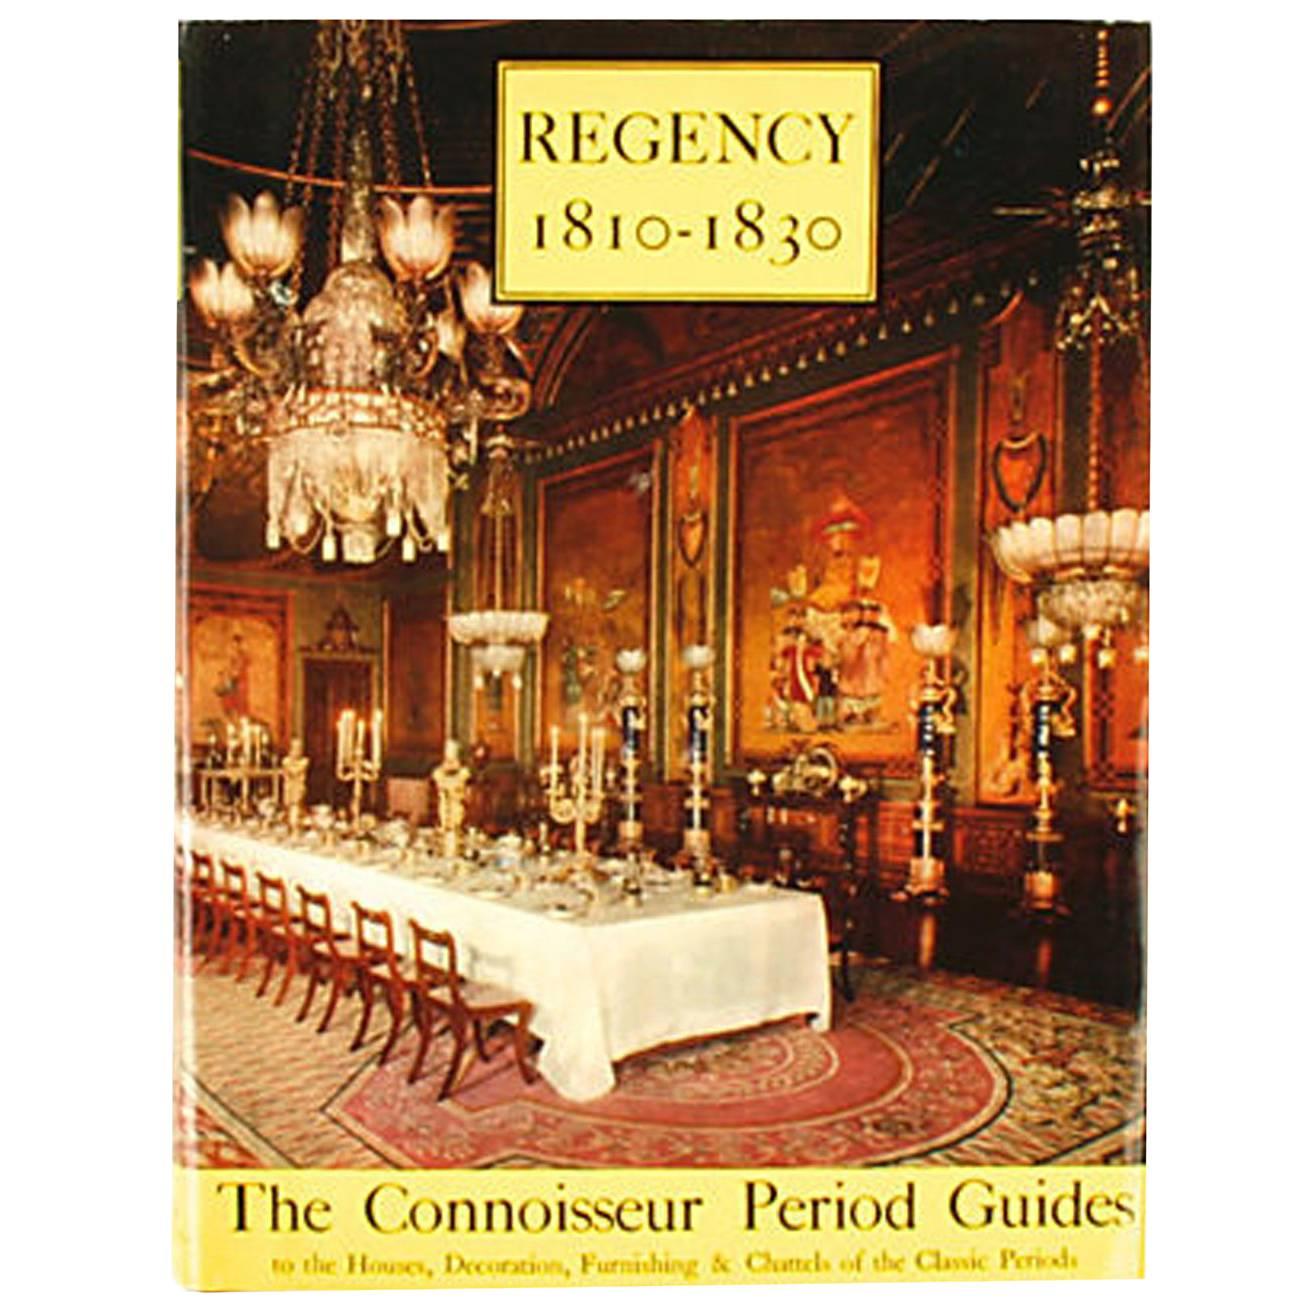 Regency Period: 1810-1830, 1st Edition